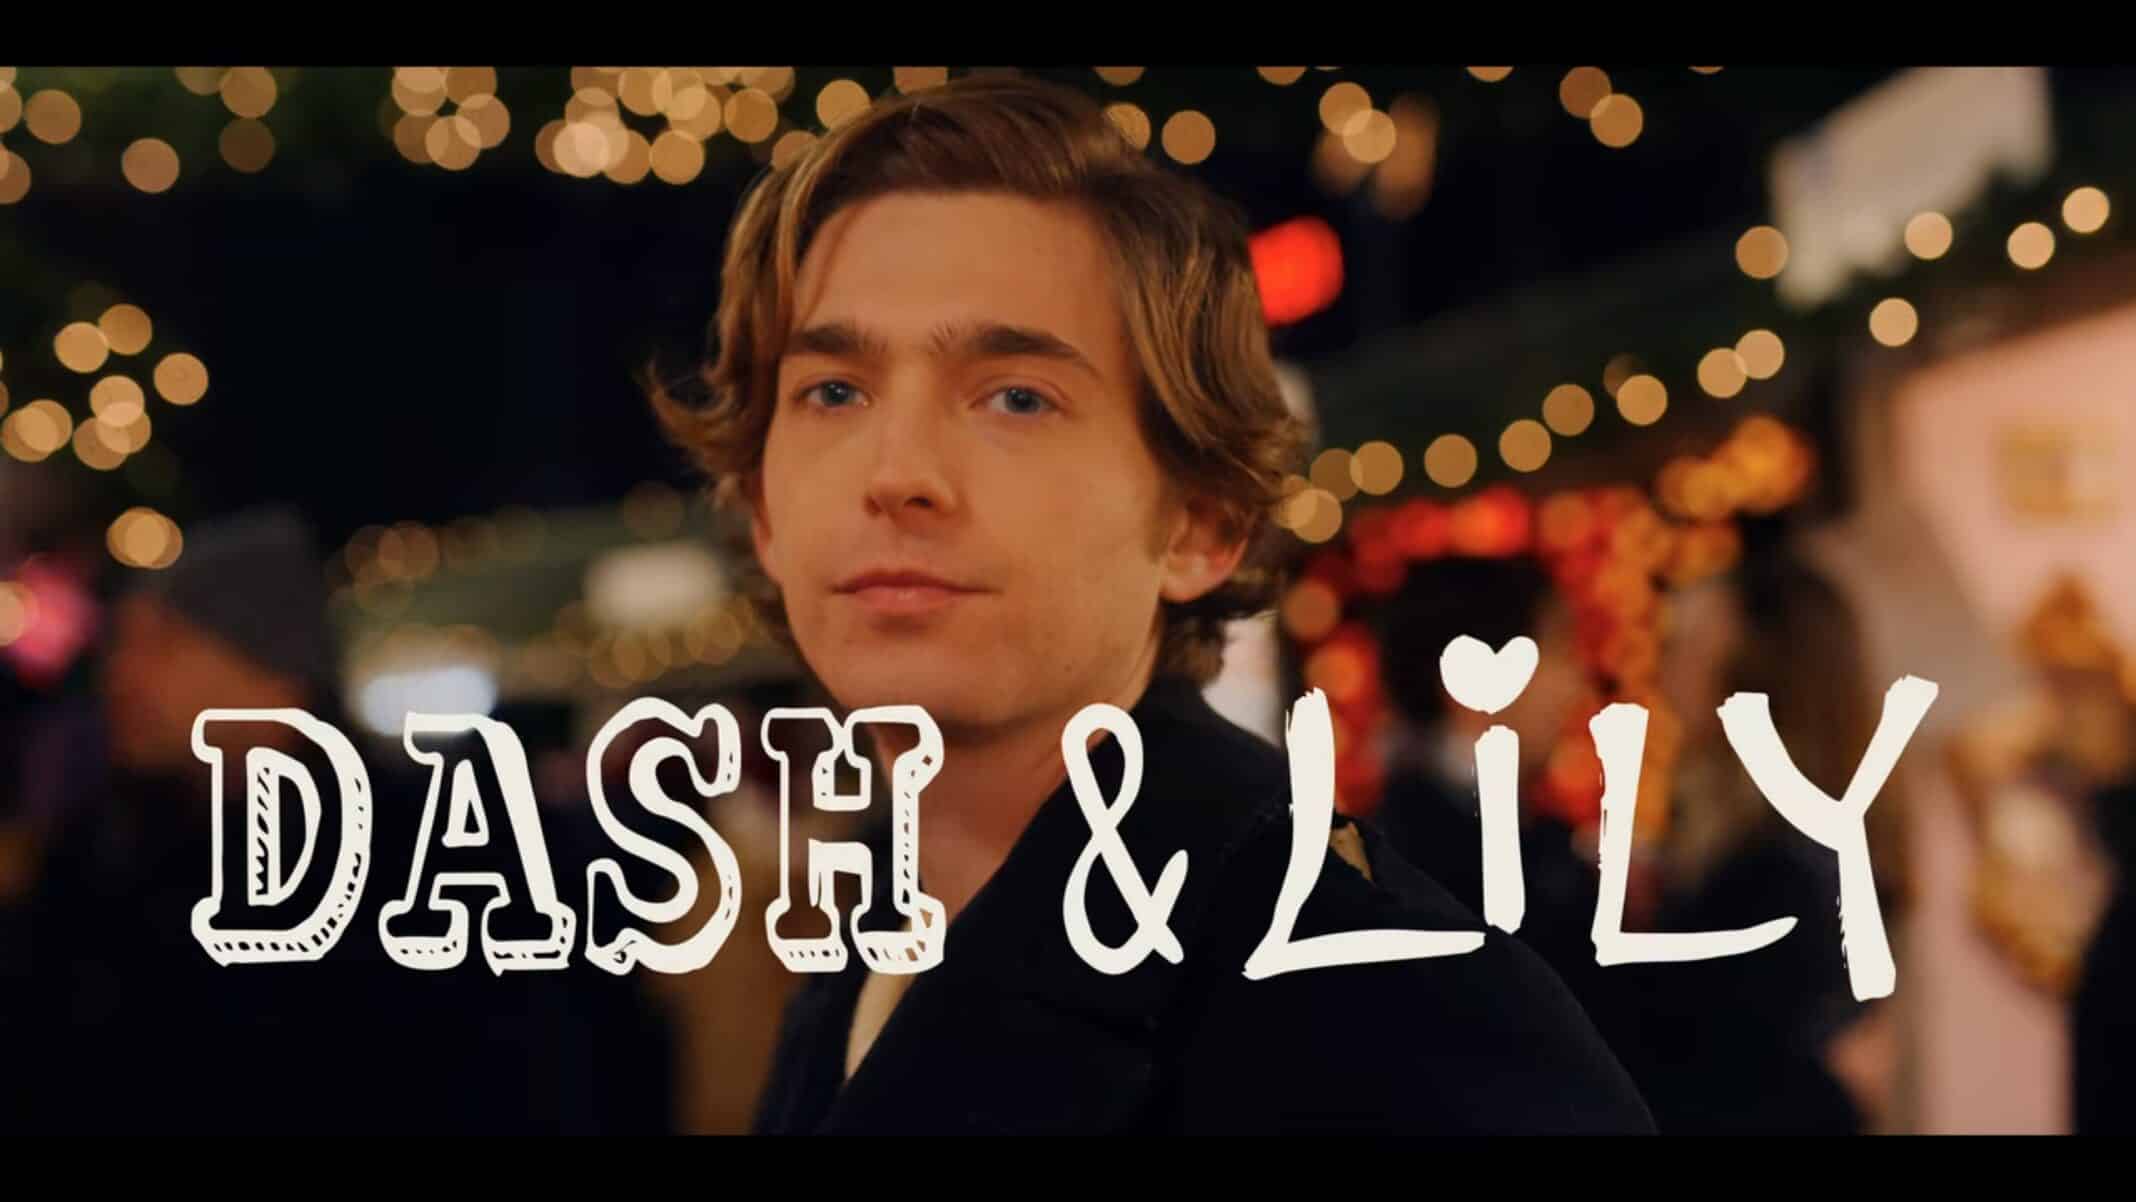 Dash & Lily: Season 1 Episode 1 “Dash” Series Premiere – Recap/ Review with Spoilers